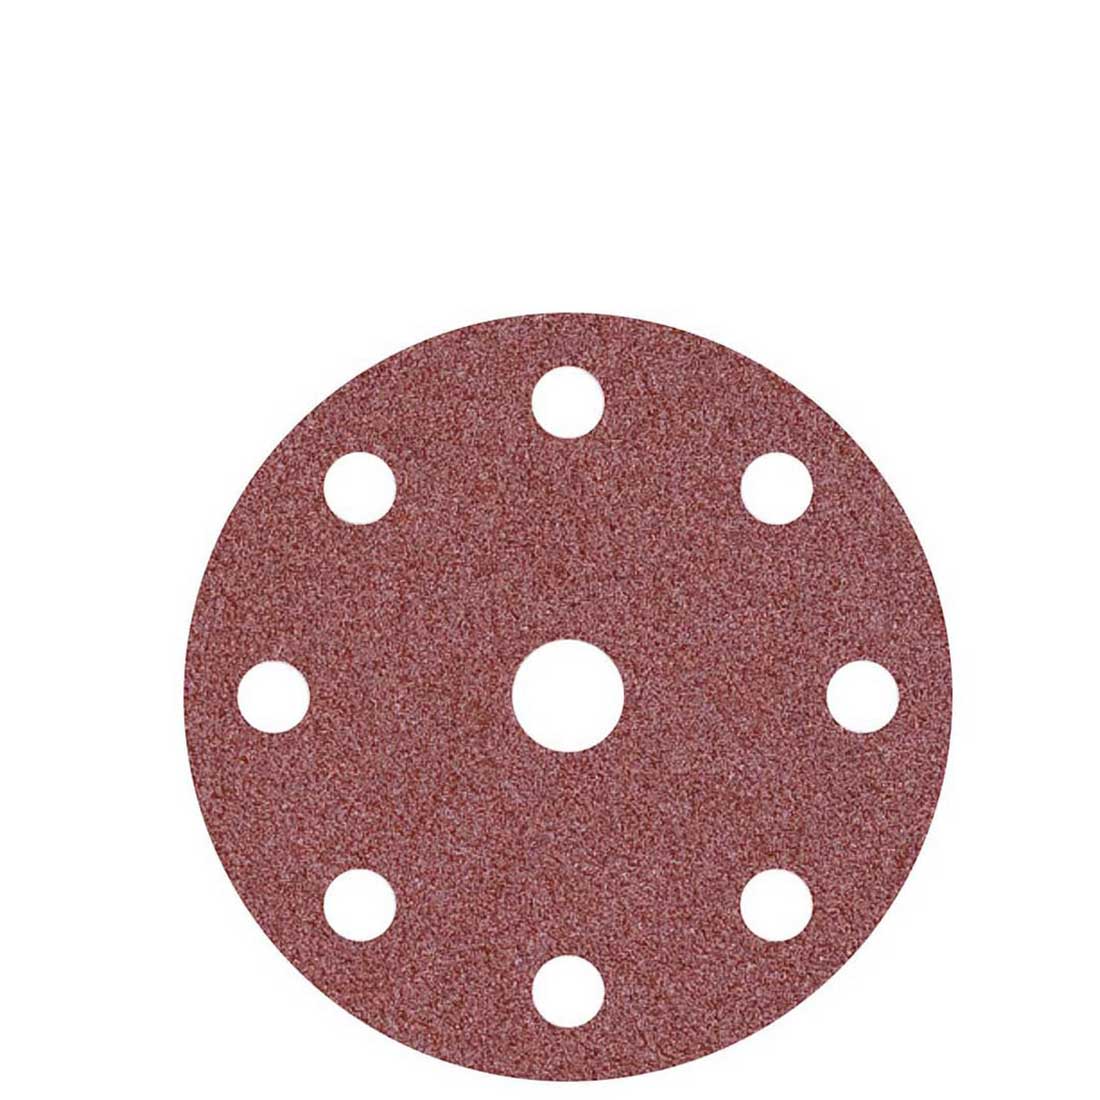 MioTools hook & loop sanding discs for random orbital sanders, G24–240, Ø 150 mm / 9 hole / aluminium oxide